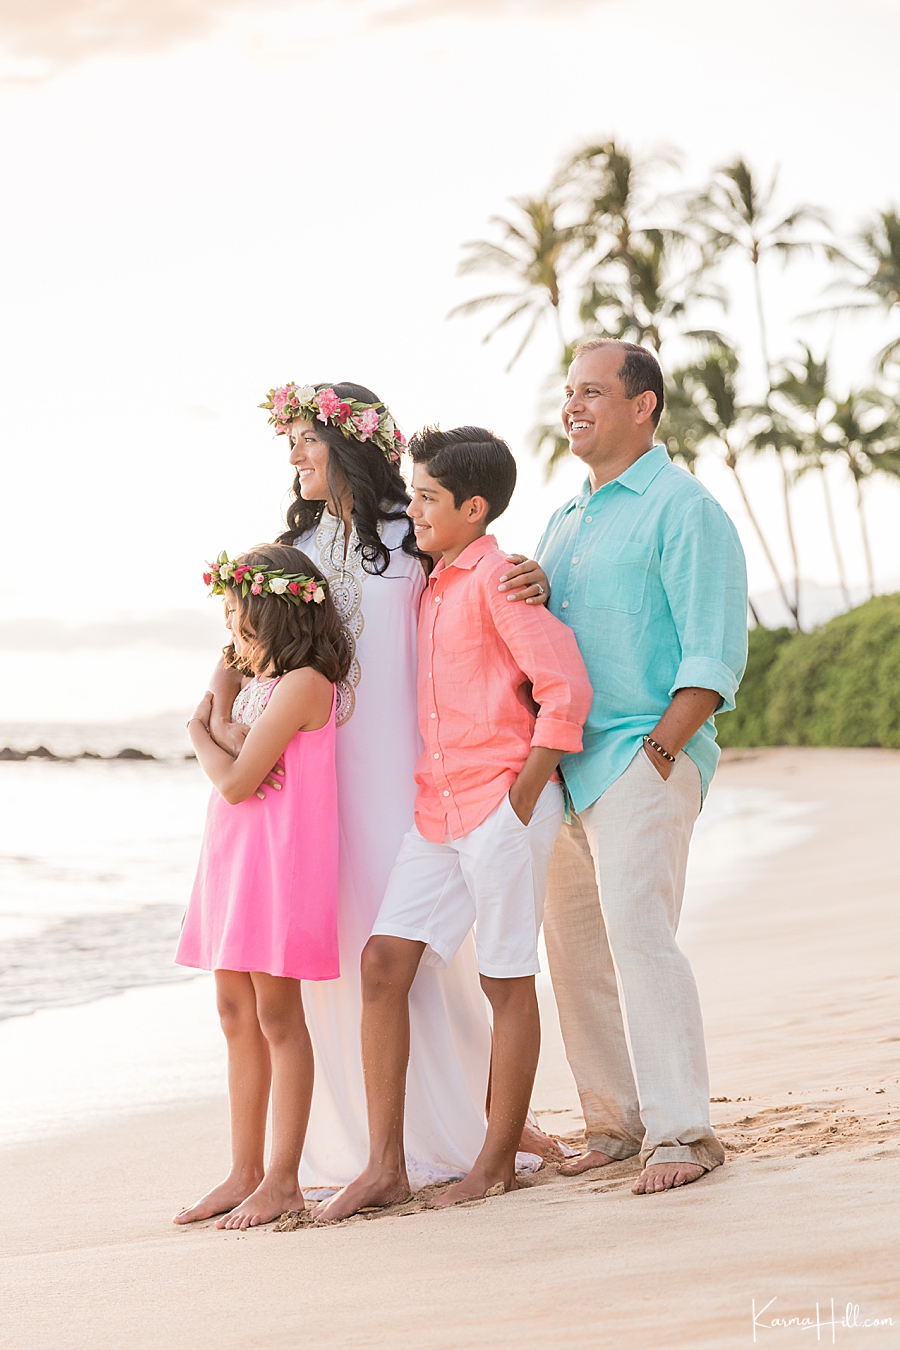 Hawaii Family Portraits